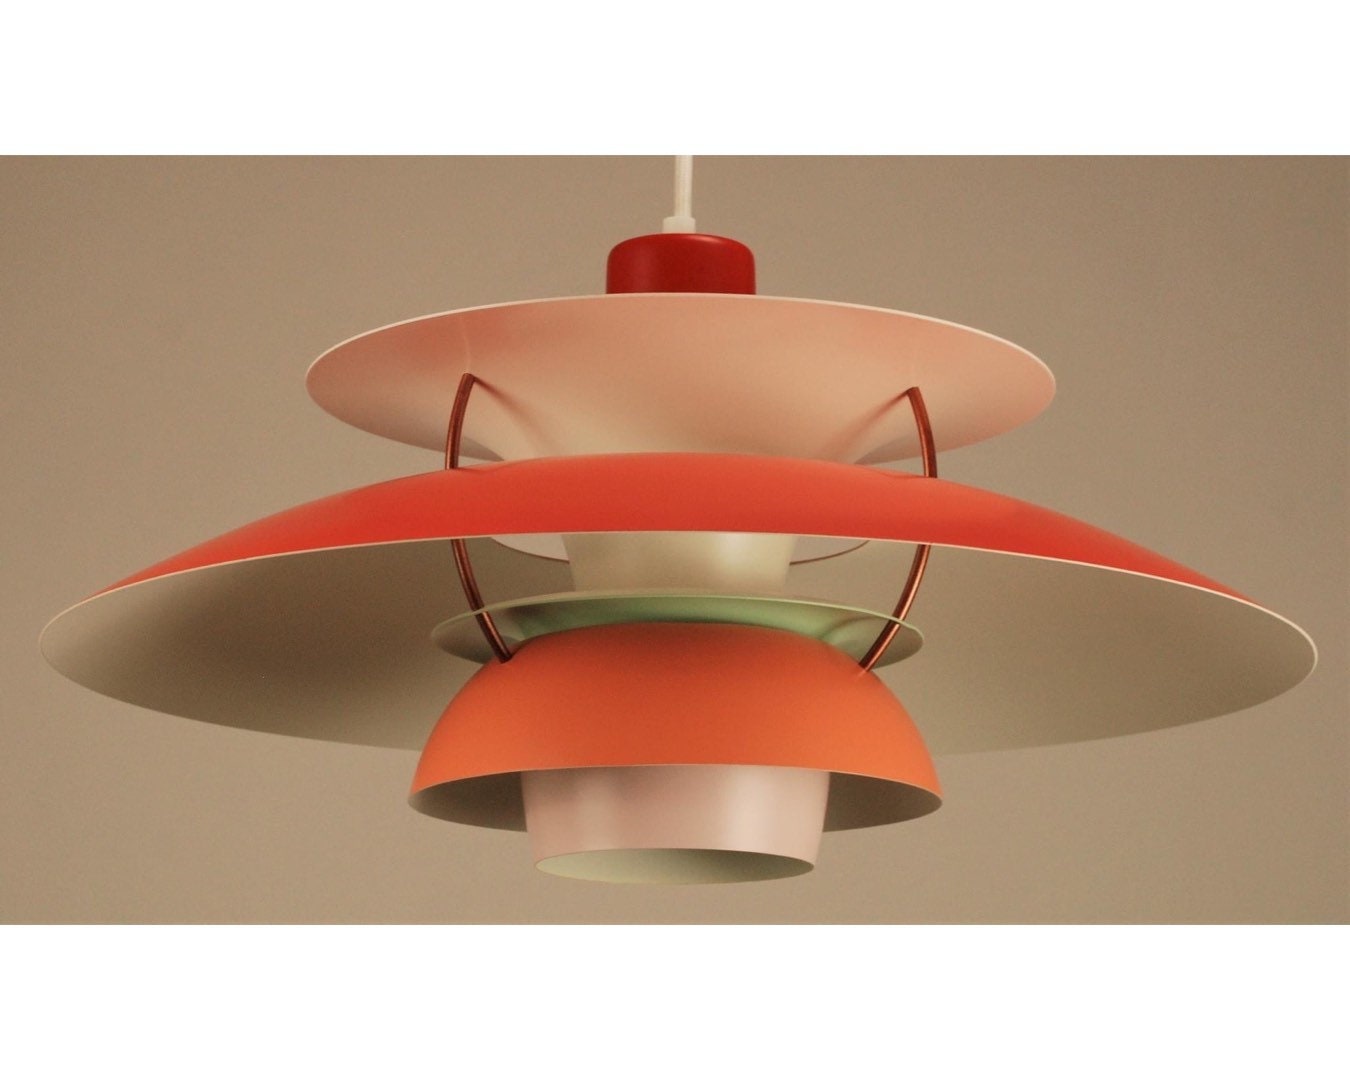 Louis Poulsen PH5 pendant lamp: the history of the three-shade light